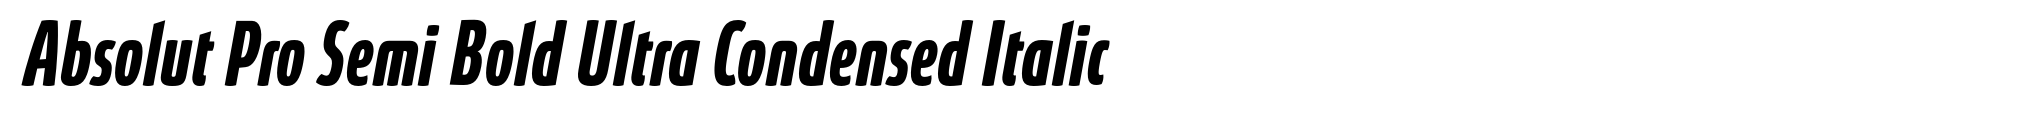 Absolut Pro Semi Bold Ultra Condensed Italic image